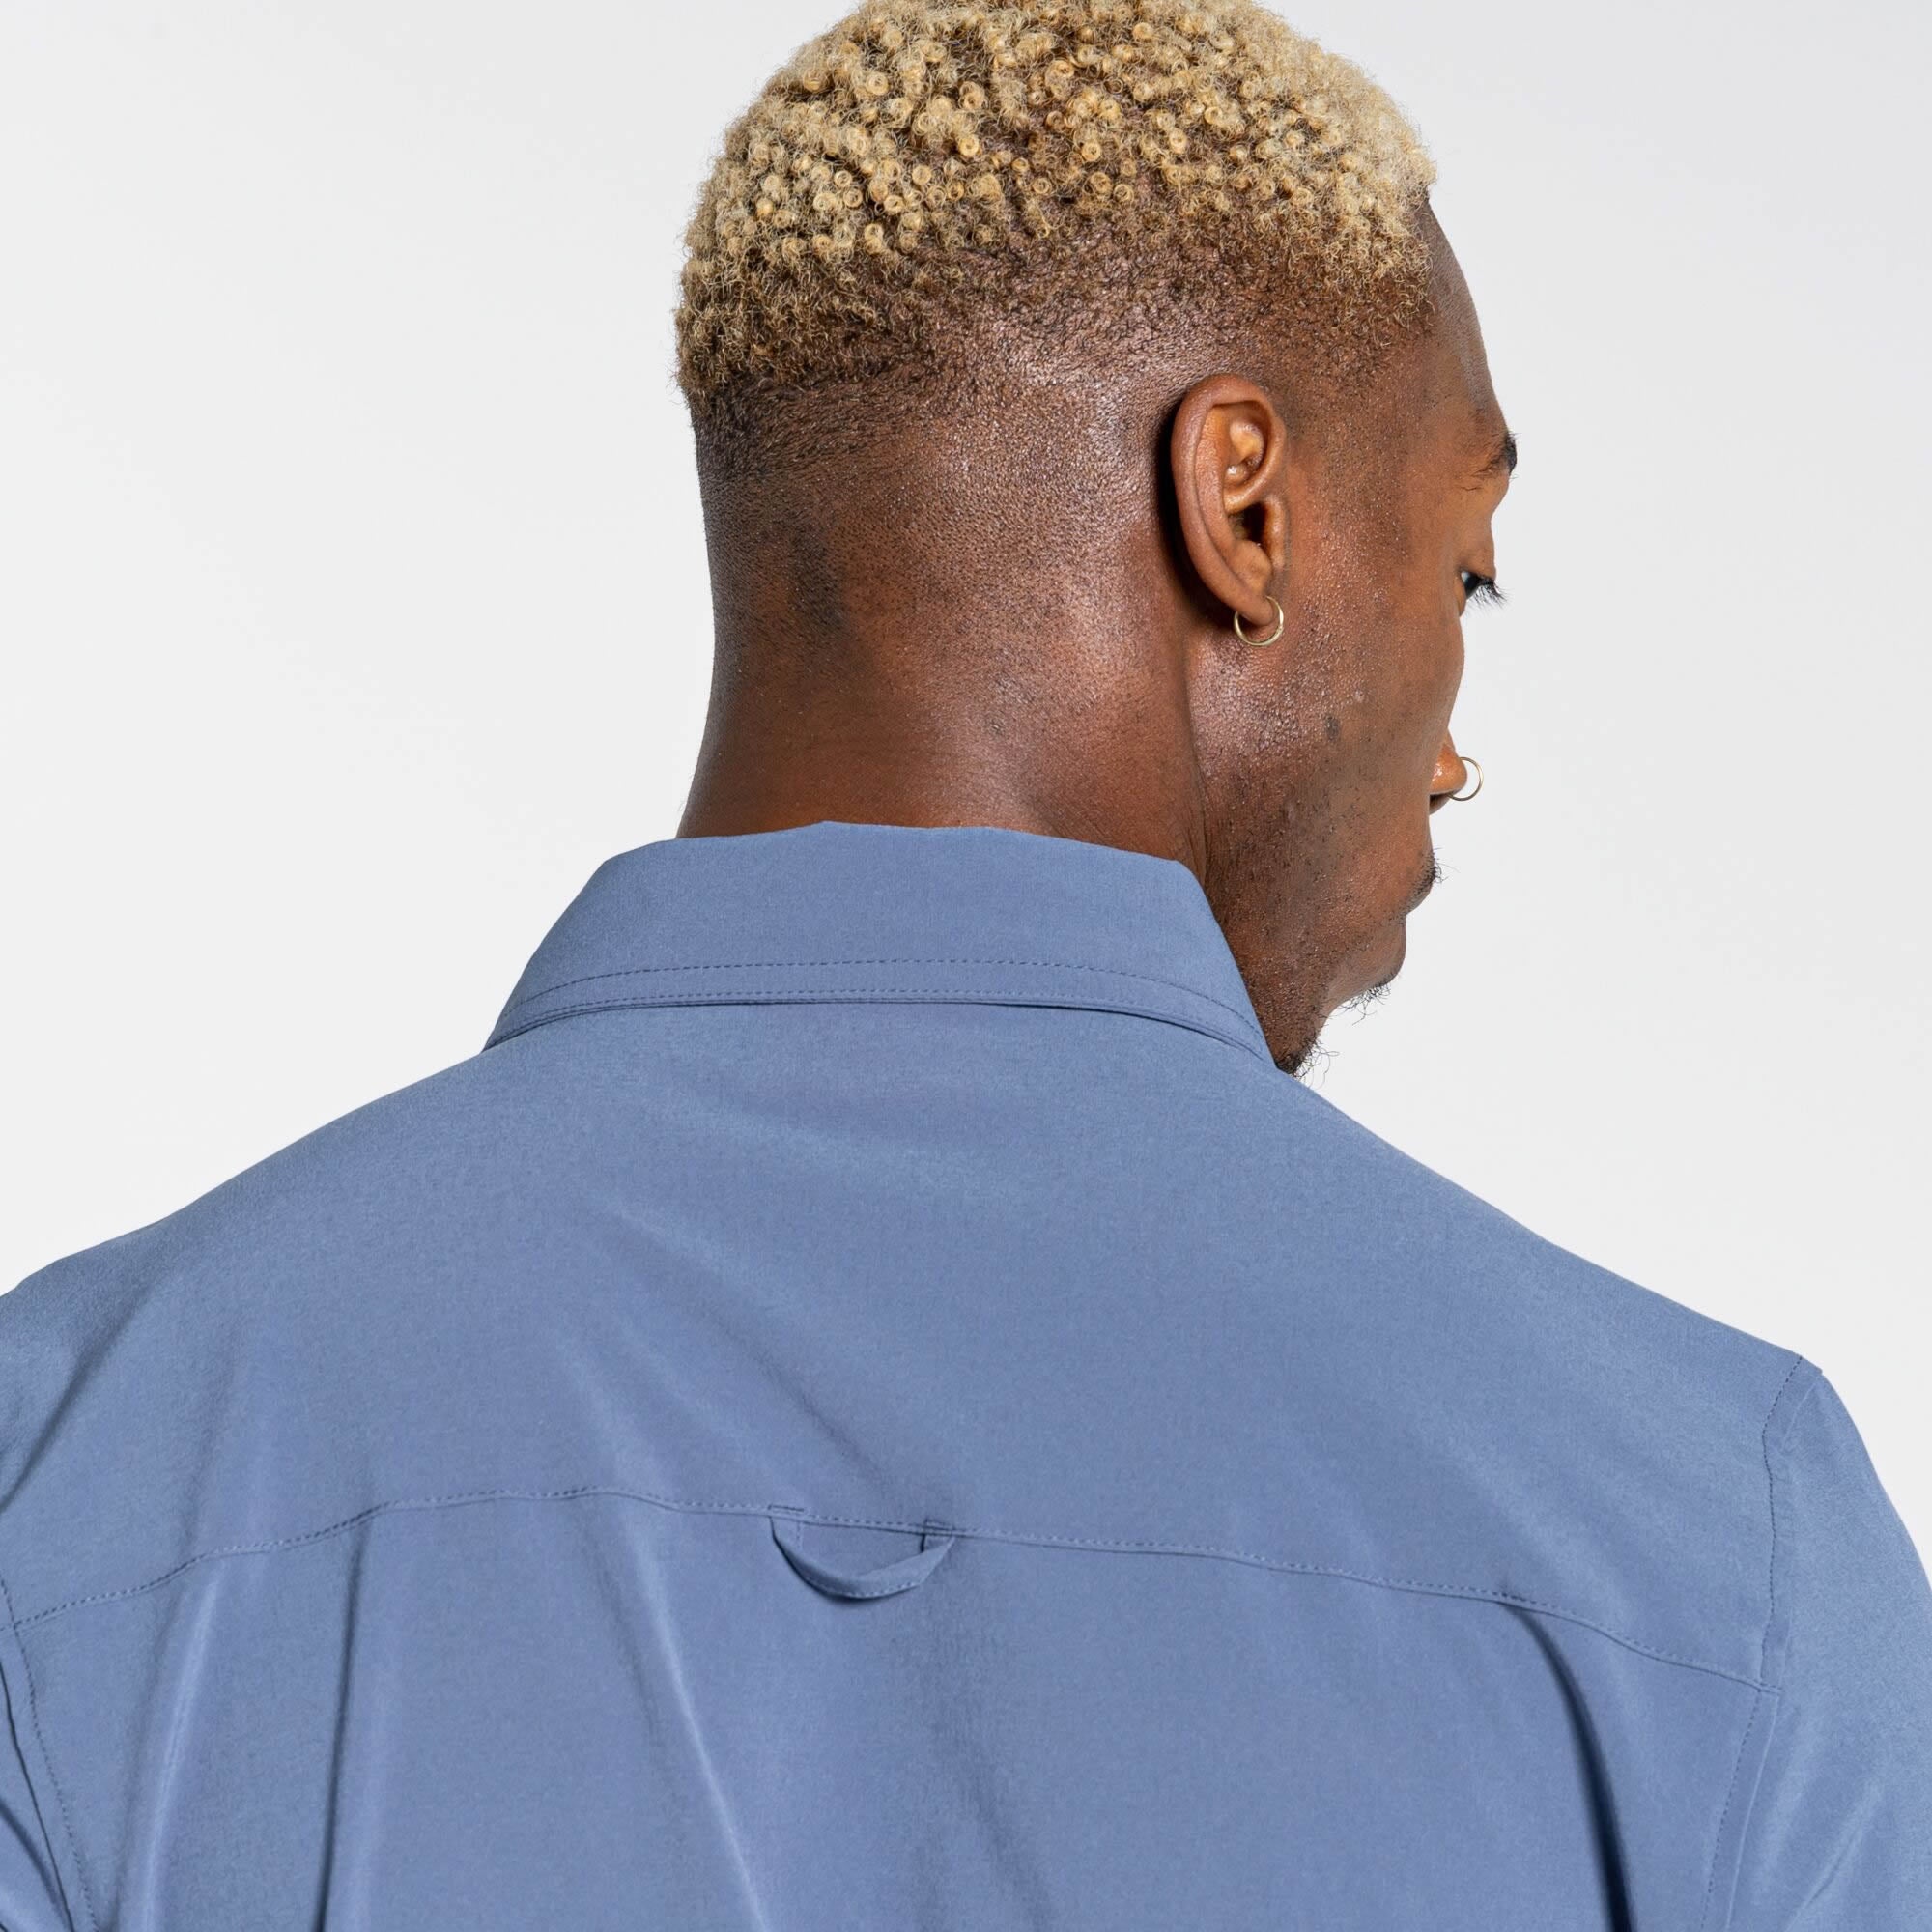 Men's Insect Shield® Pro IV Long Sleeved Shirt | Salton Blue